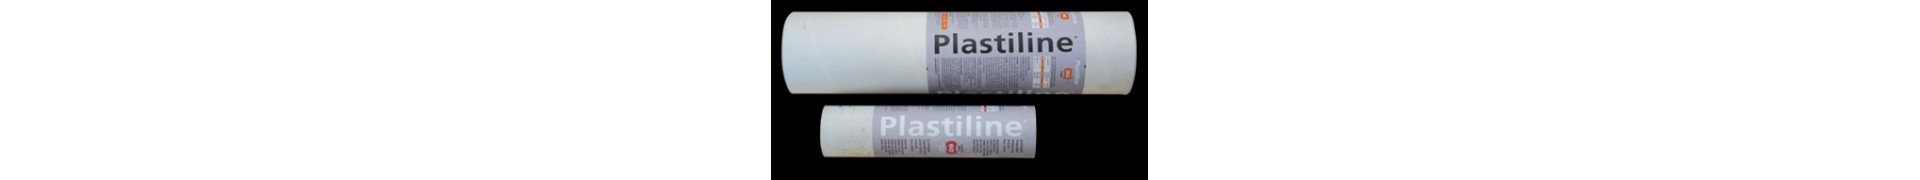 PLASTILINE HERBIN 40 5 Kg TRES SOUPLE PLASTILINE GRISE 